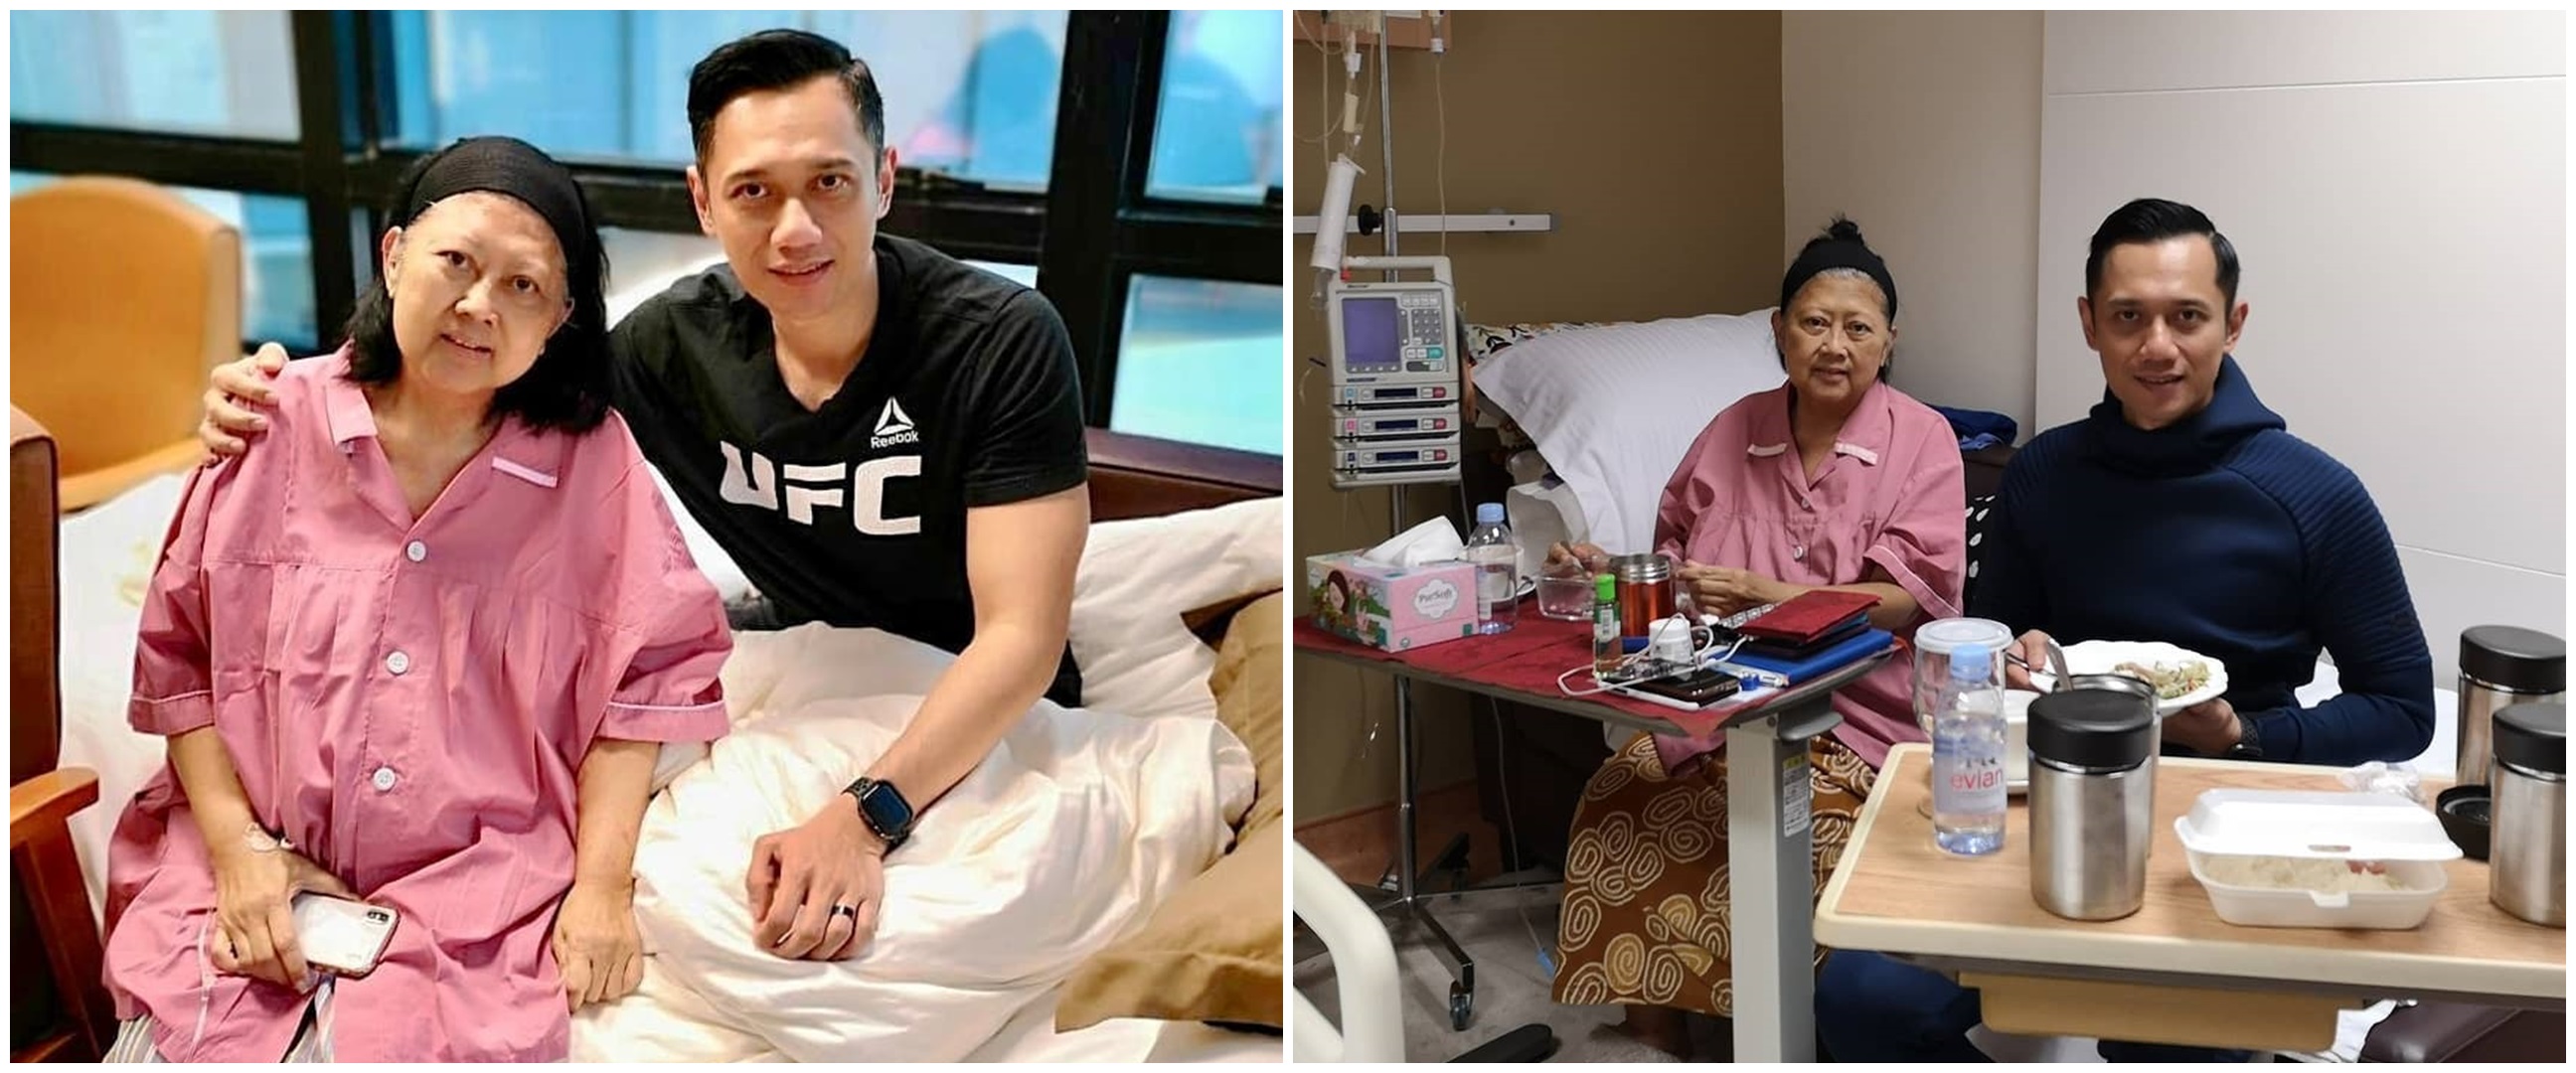 Satu tahun kepergian Ani Yudhoyono, Agus Harimurti ungkap rindu